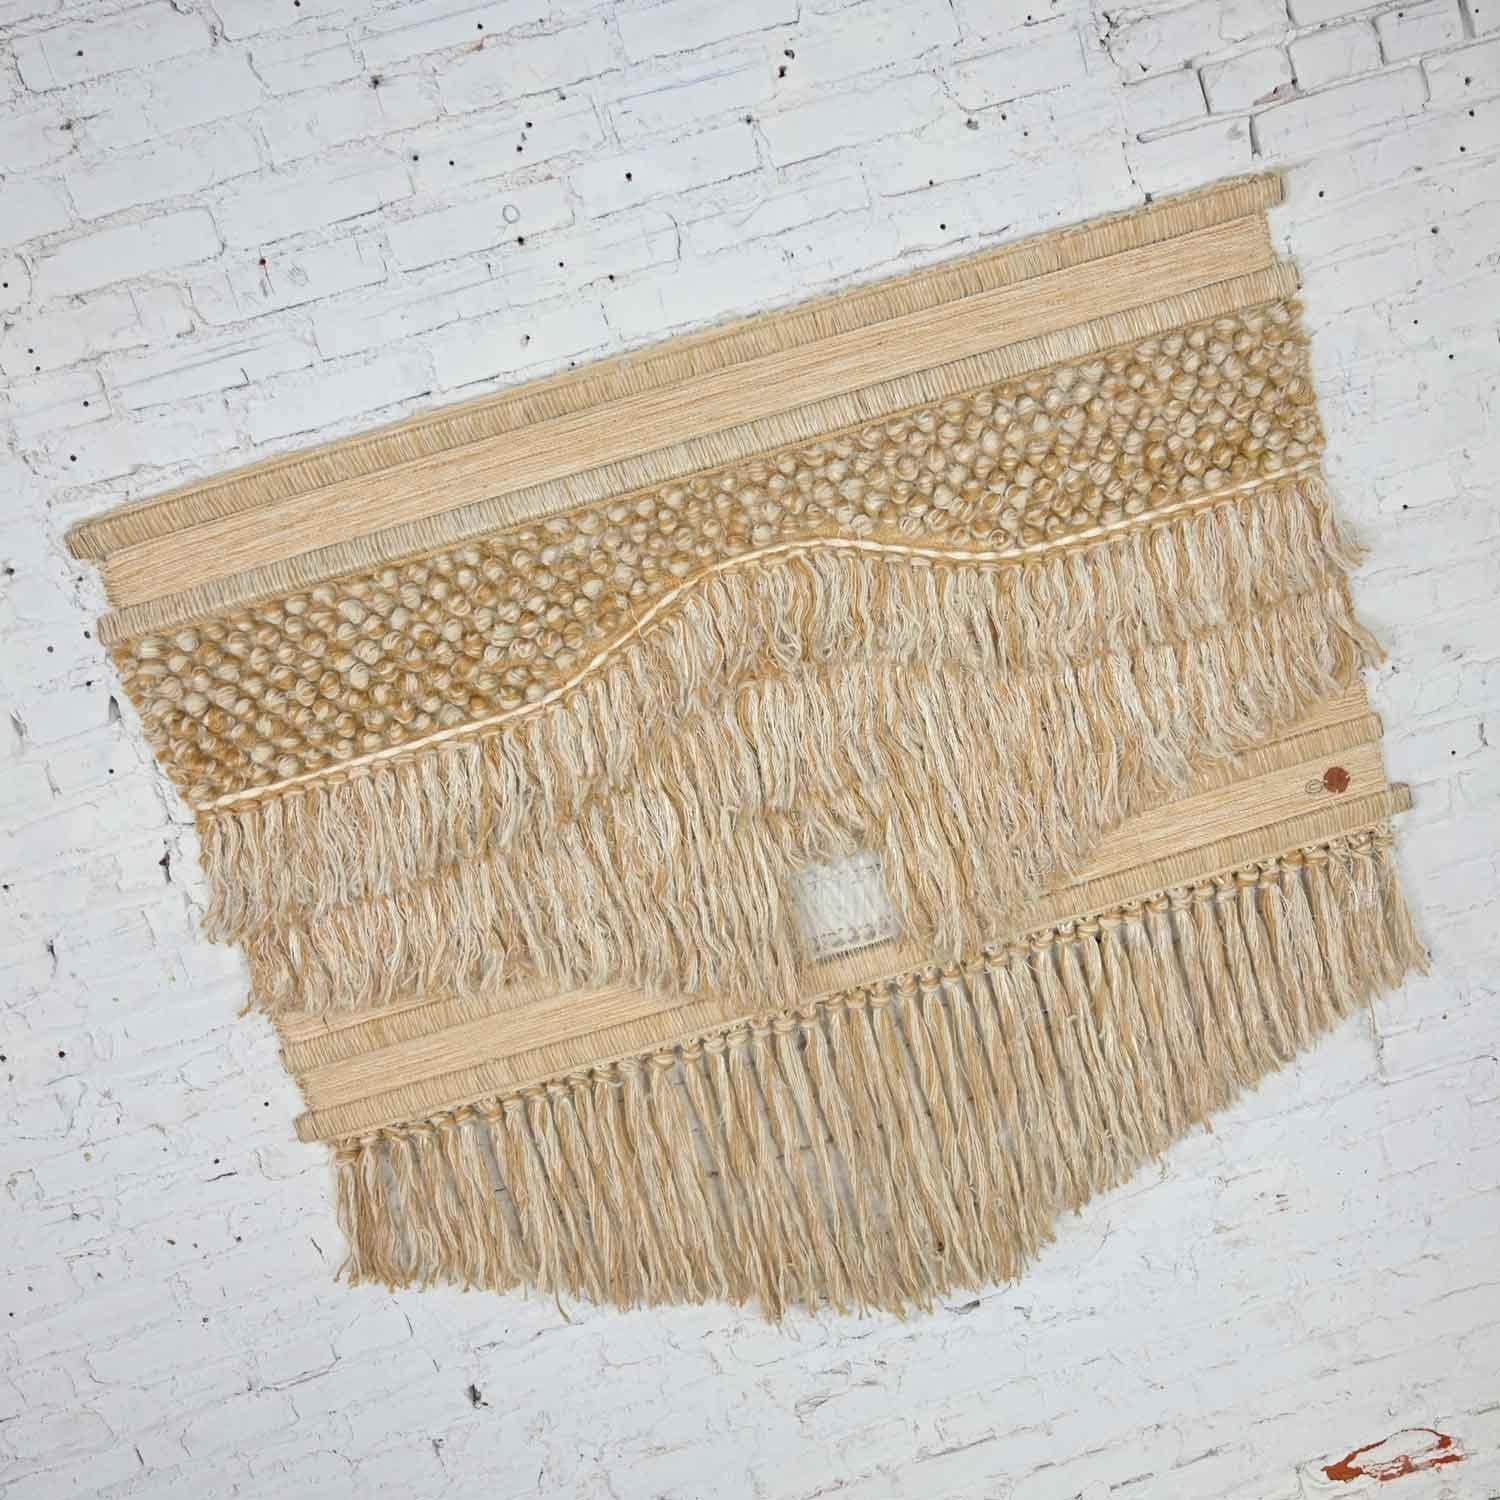 Organic Modern Don Freedman Modern Textile Woven Wall Hanging #436 c/o Tree Time Inc. for Inter